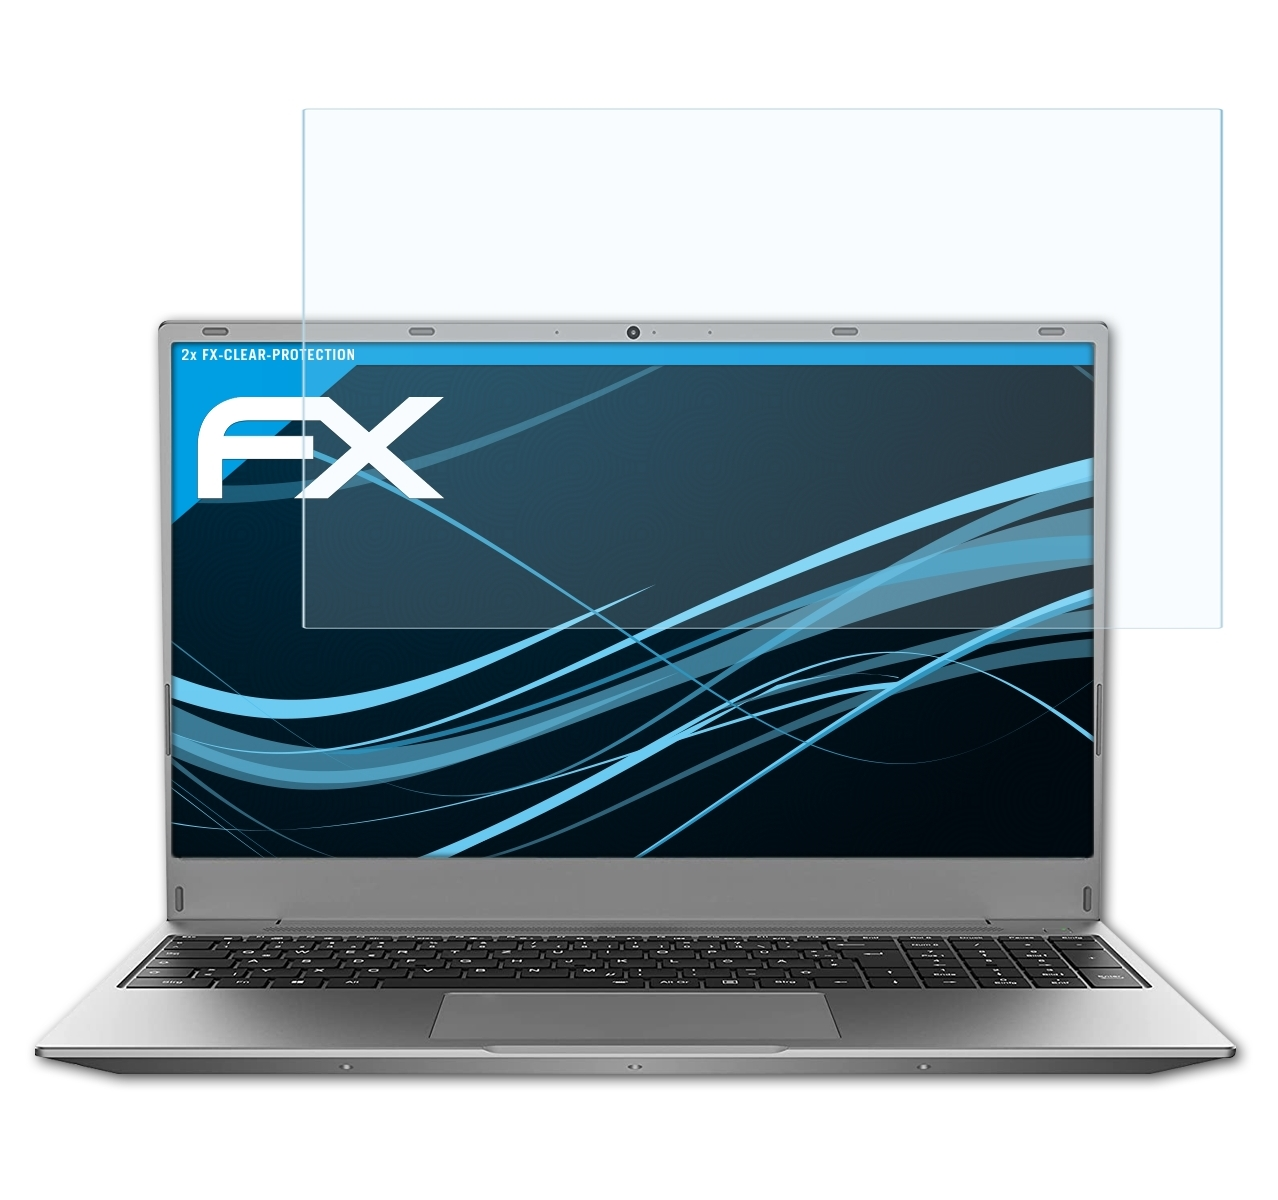 ATFOLIX 2x Medion (MD63890)) FX-Clear E16402 Displayschutz(für AKOYA